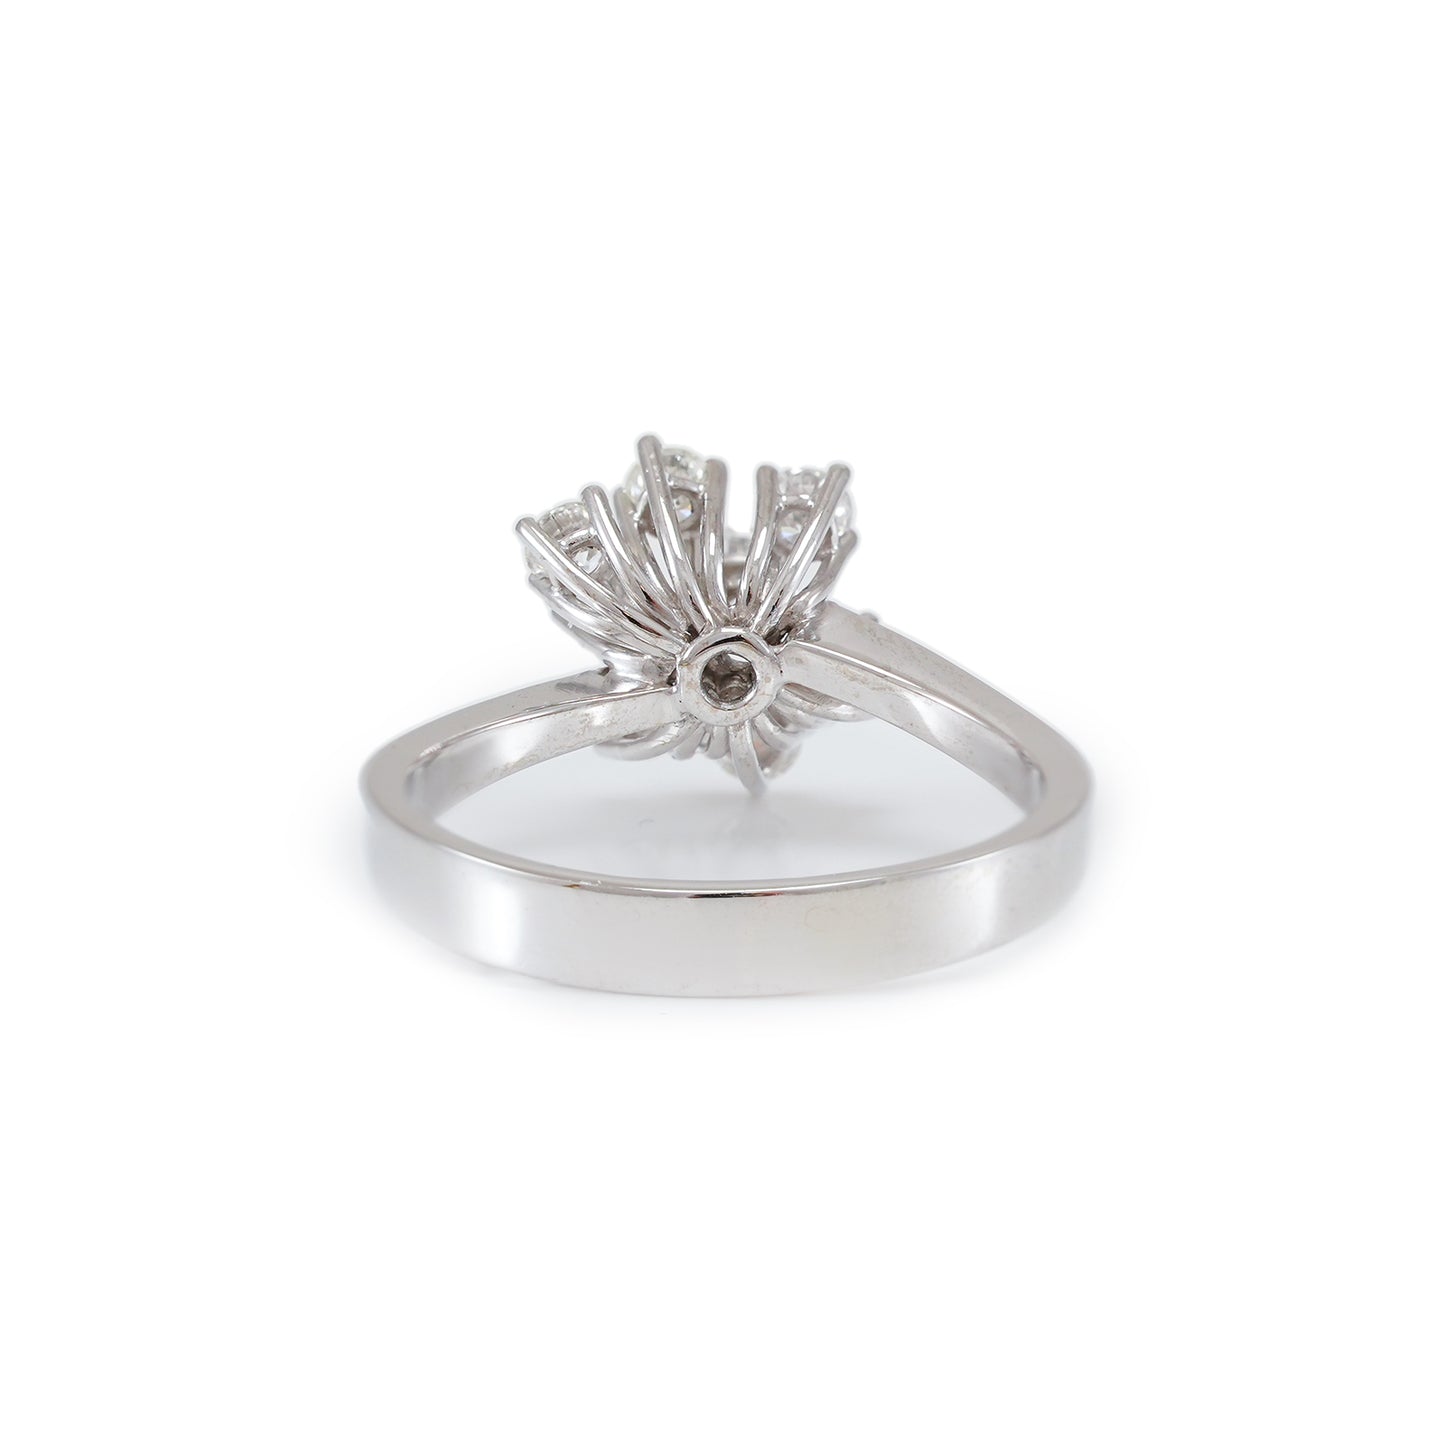 Vintage diamond ring white gold 18K women's jewelry women's ring gold ring diamond jewelry